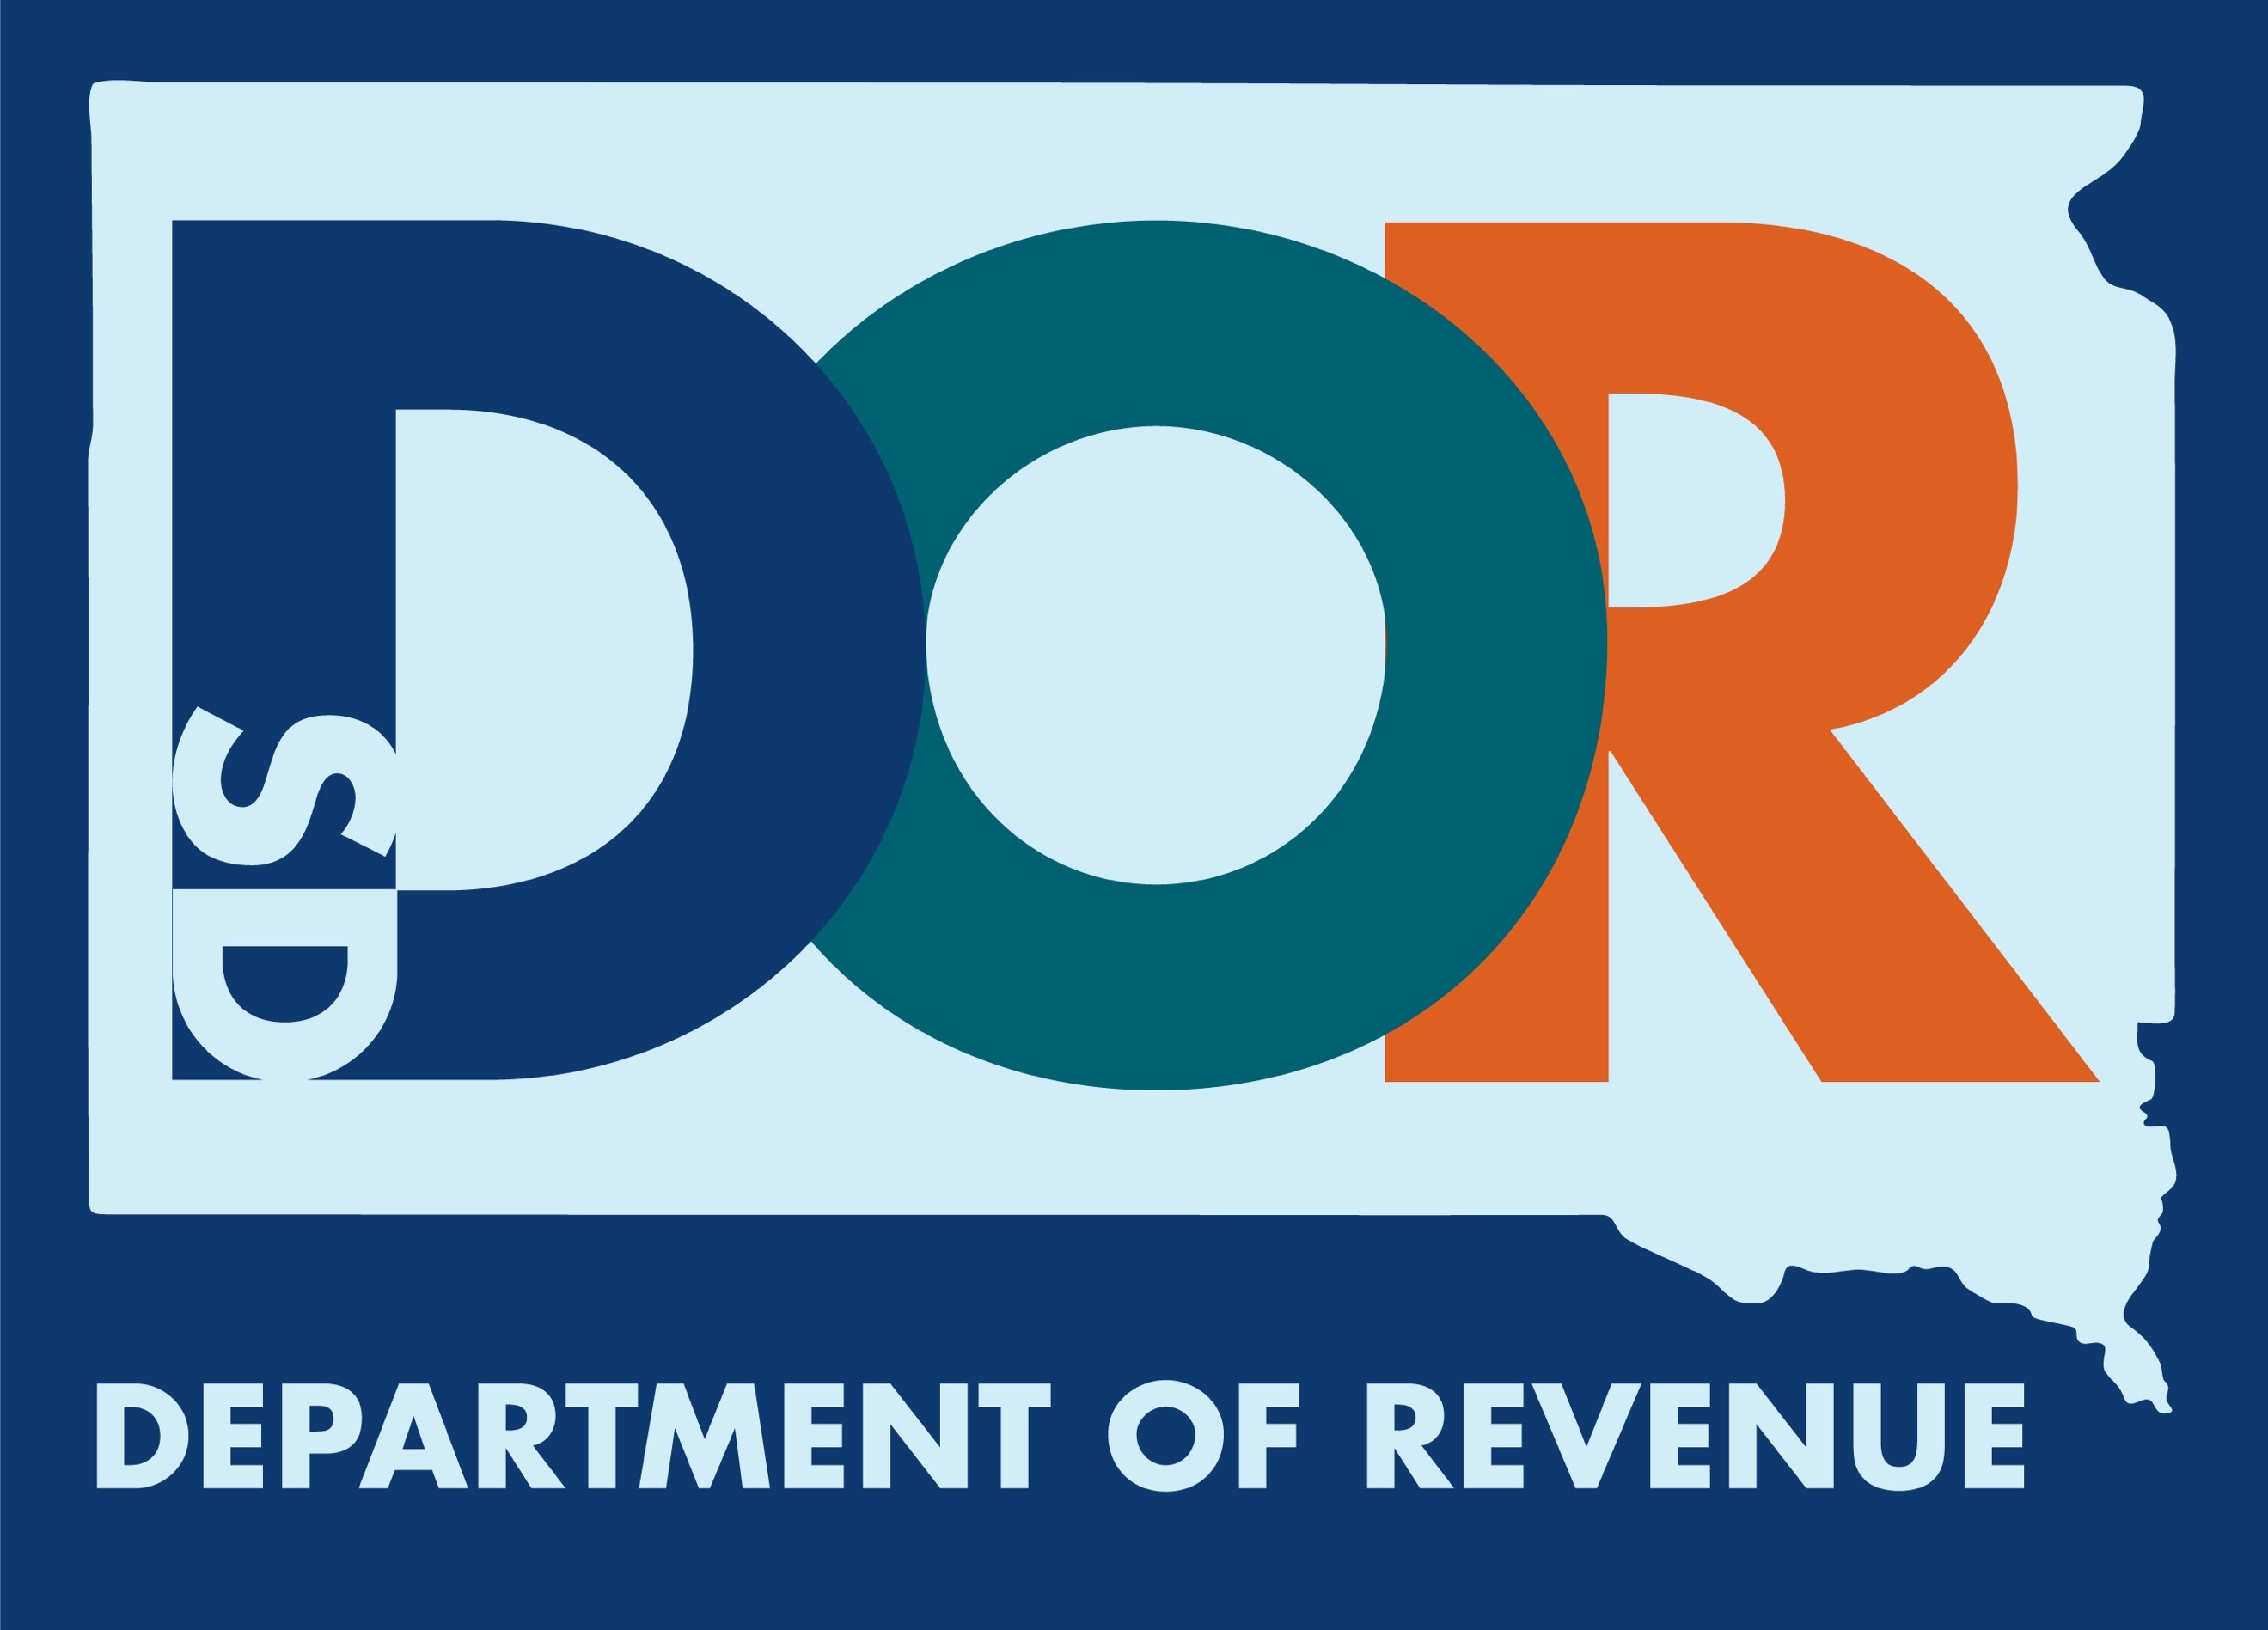 South Dakota Department of Revenue
Business Tax Division 